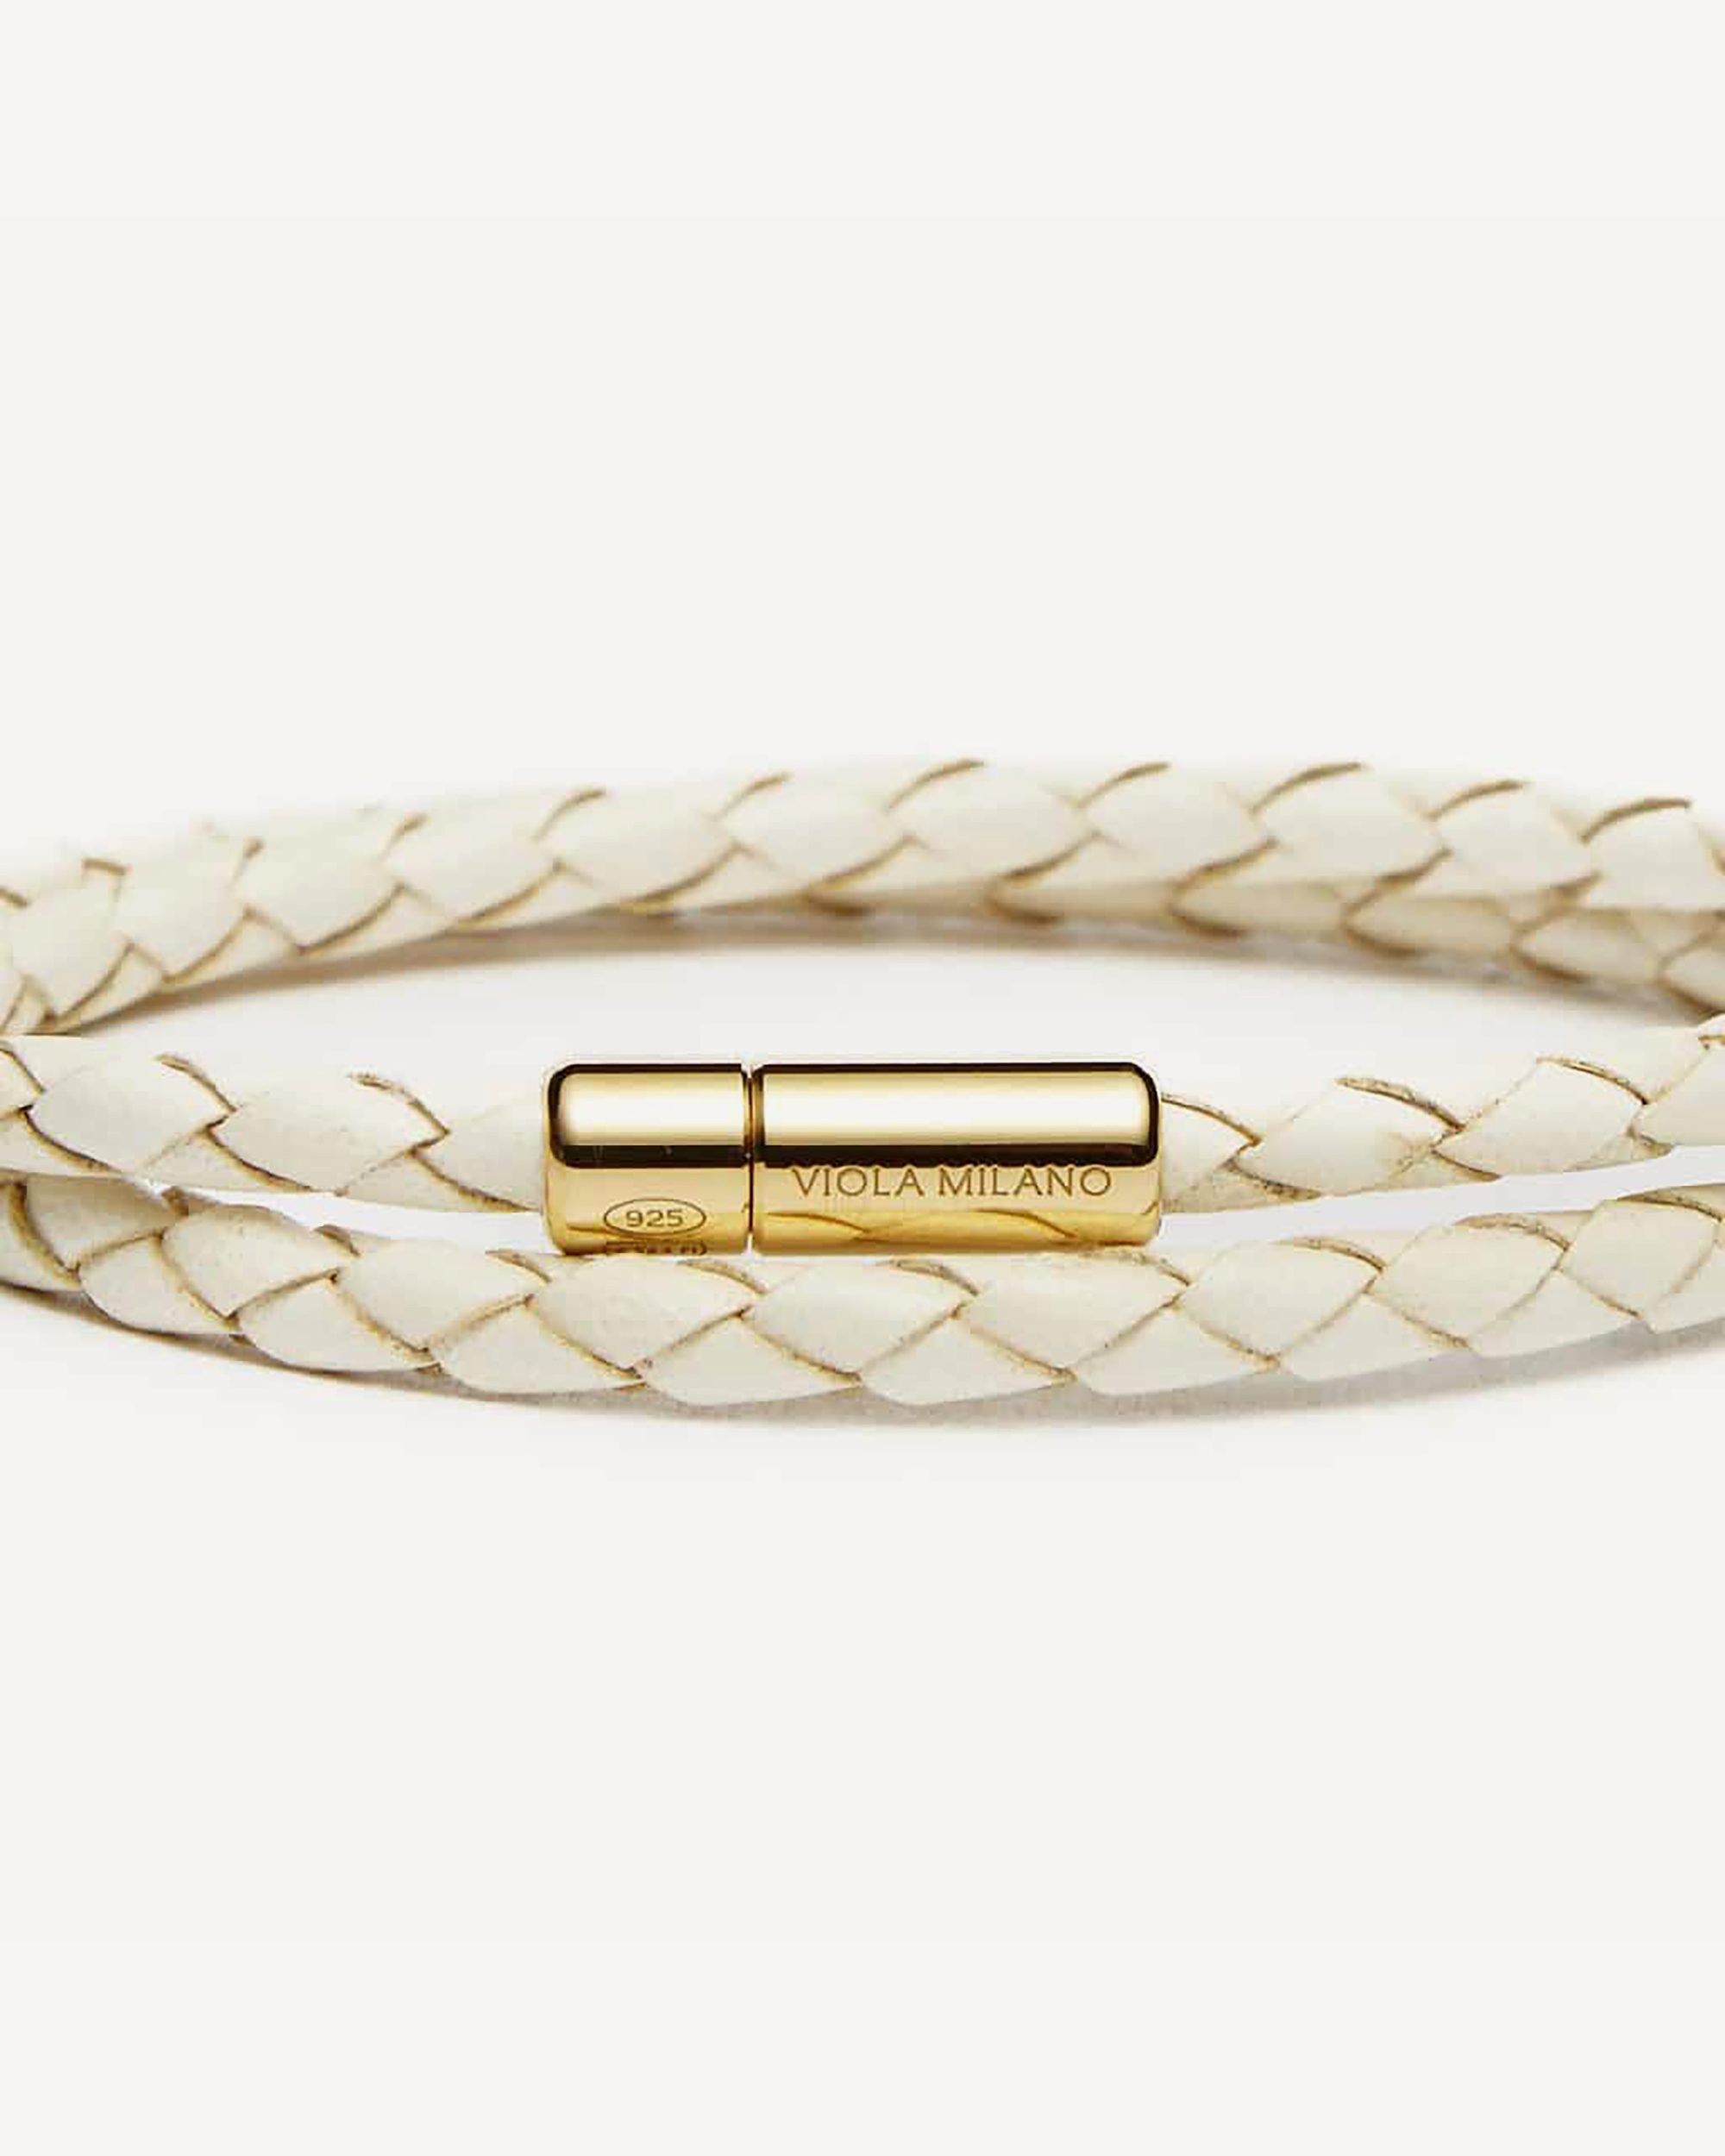 Unisex Chanel Bracelet with Hanging CC charm | BrandFactoryPro